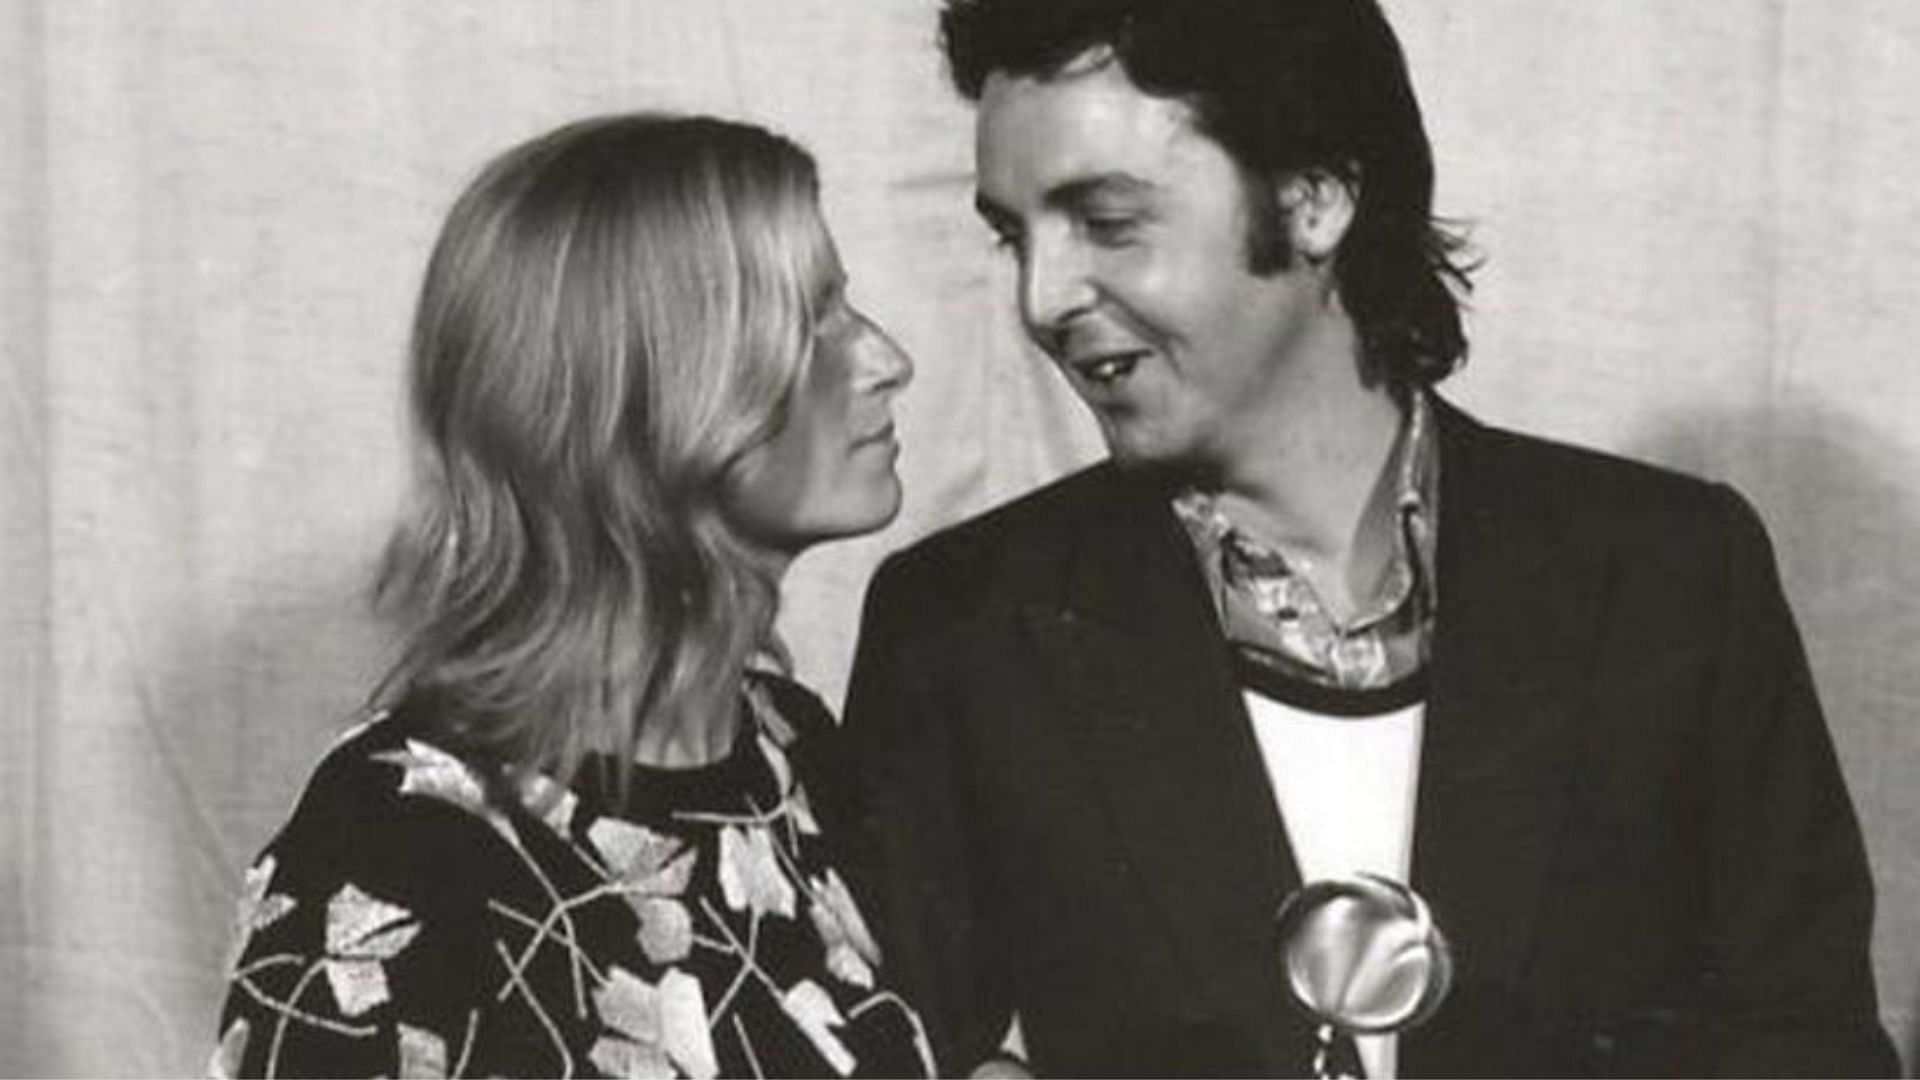 A still of Linda McCartney and Paul McCartney in the 1971 Grammys (Image Via Grammy Awards)